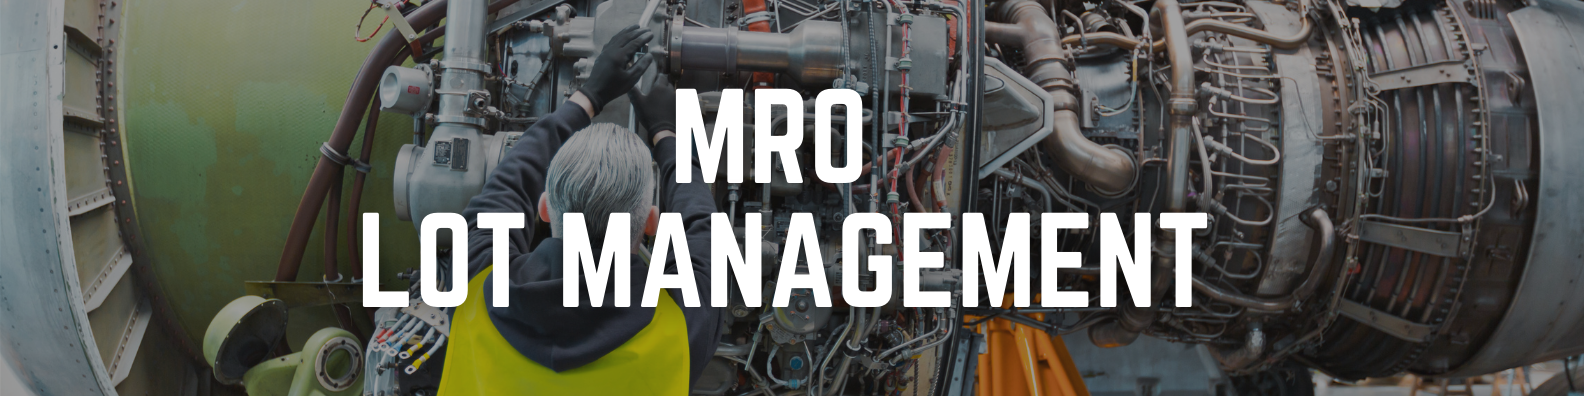 MRO Lot Management